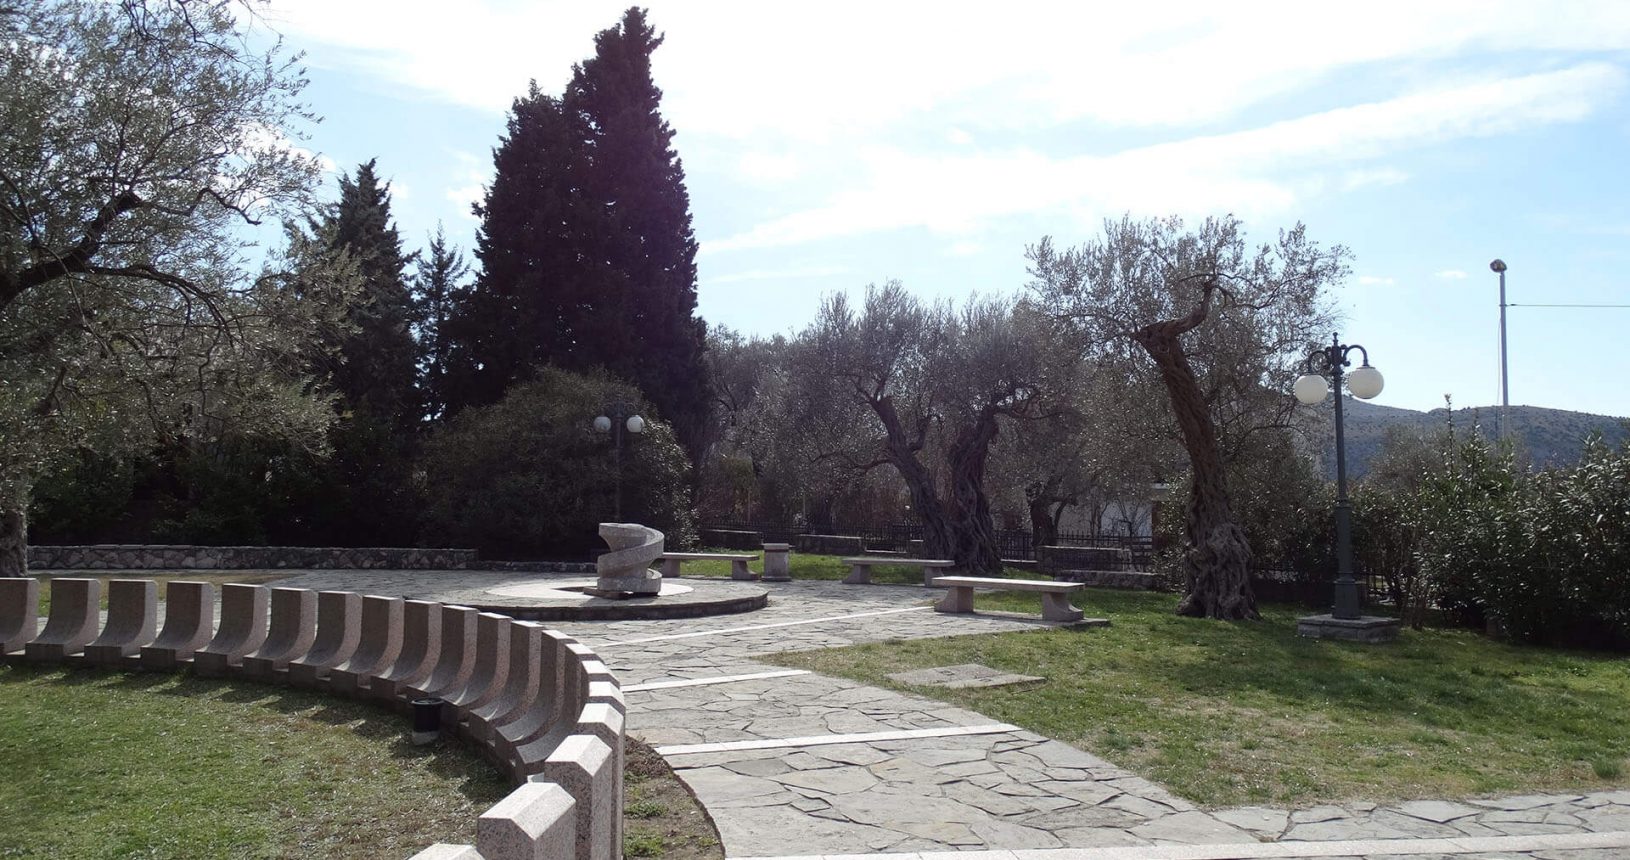 Area around Old Olive Tree